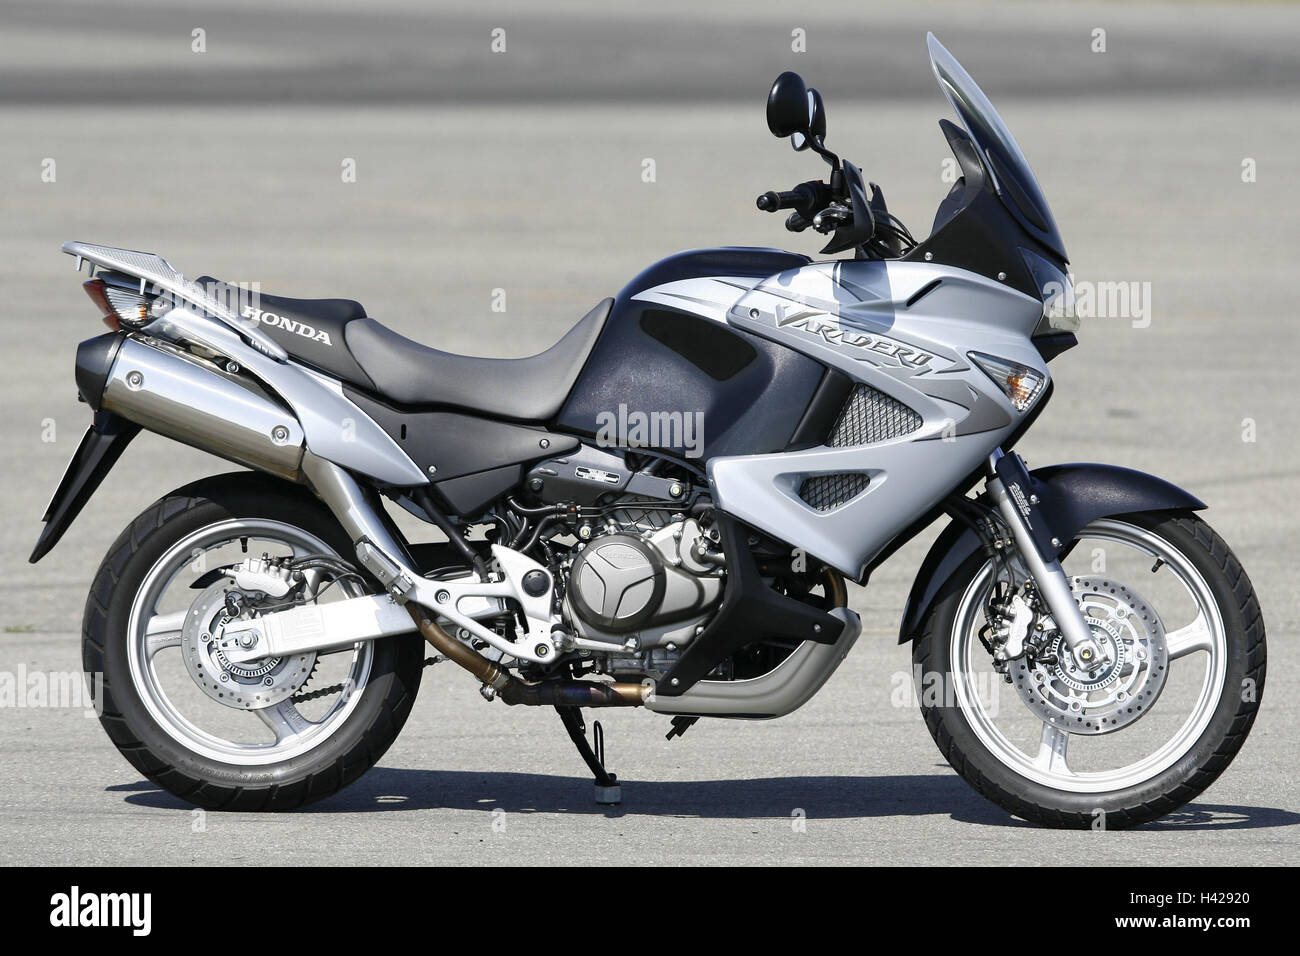 Honda varadero motorcycle hi-res stock photography and images - Alamy